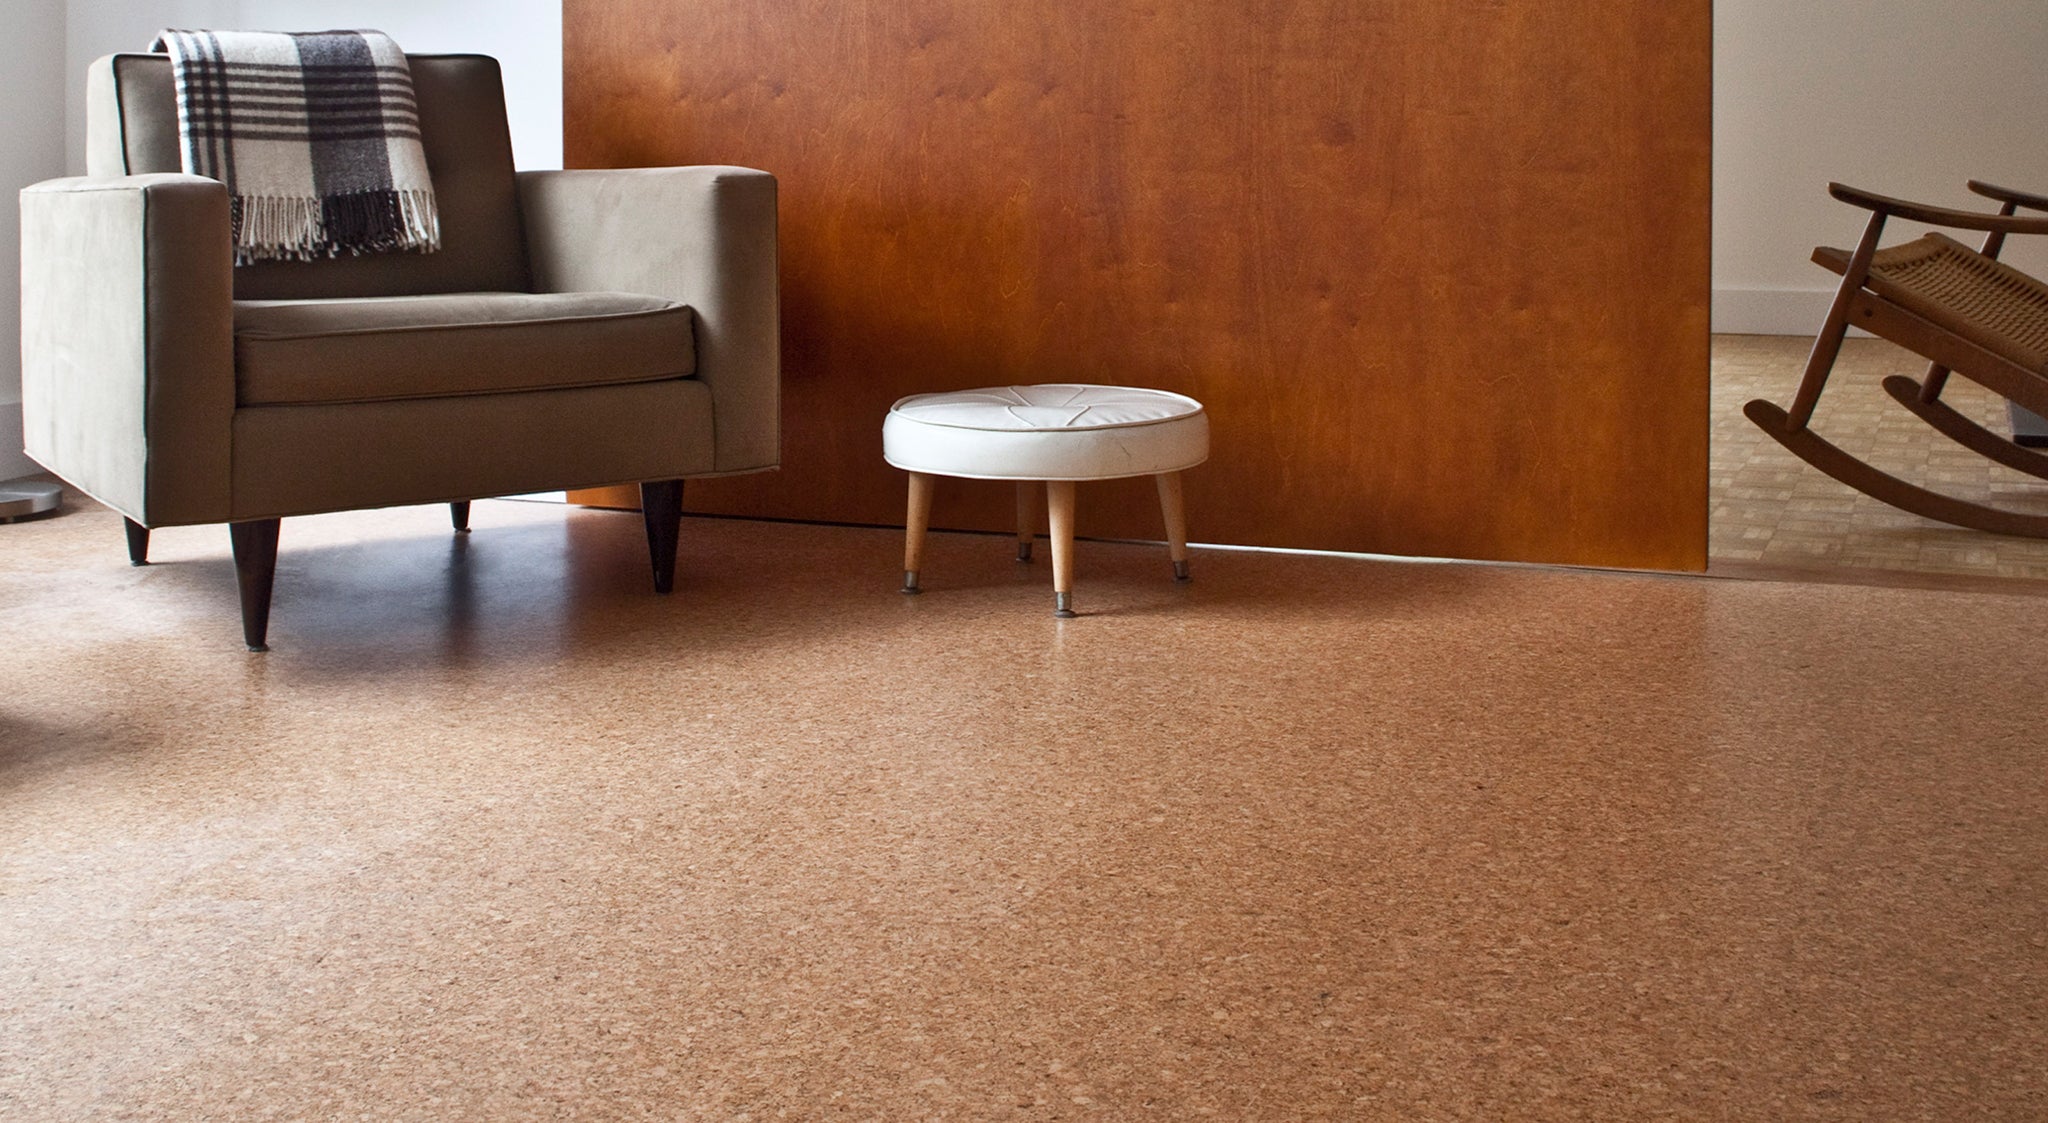 Luxury Cork Rubber And Vinyl Flooring In Modern Plain